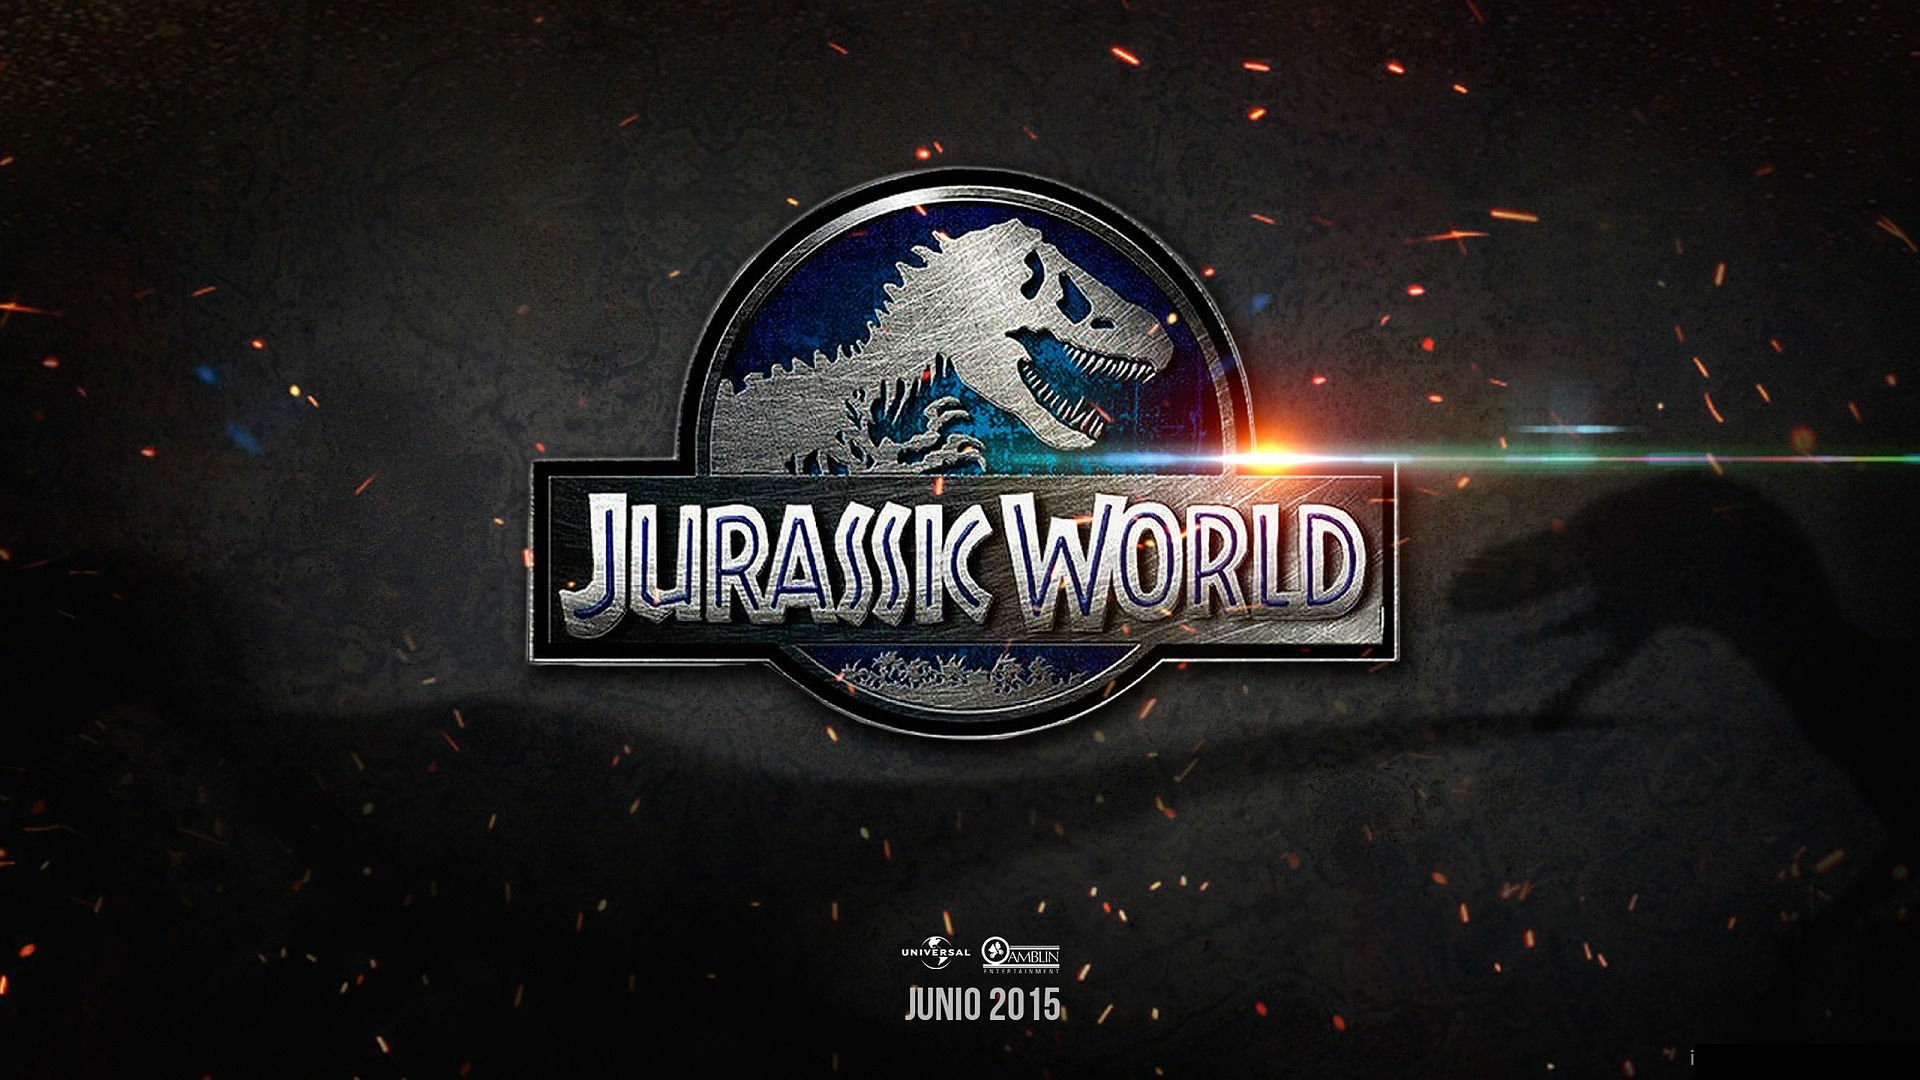 1920x1080 JURASSIC WORLD adventure sci-fi dinosaur action adventure fantasy poster  wallpaper |  | 572297 | WallpaperUP